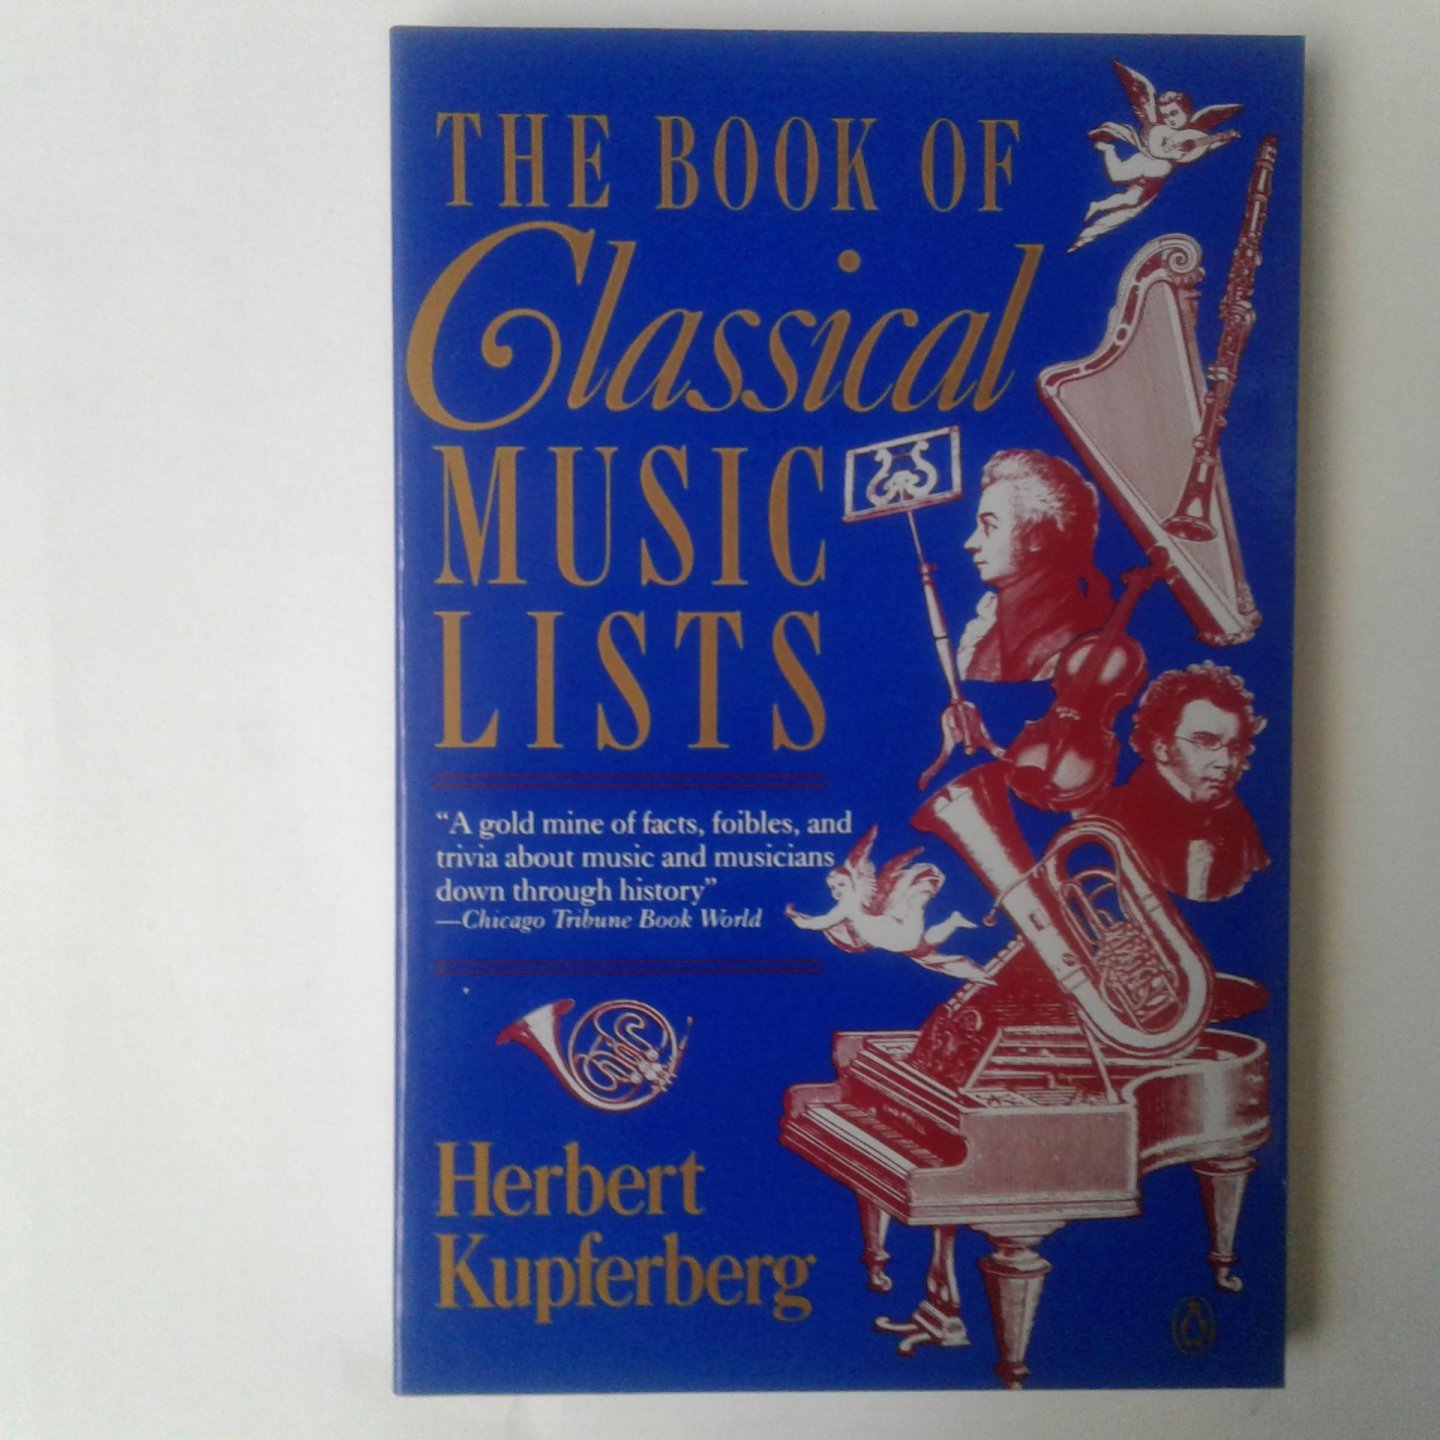 Kupferberg, Herberg - The Book of Classical Music Lists